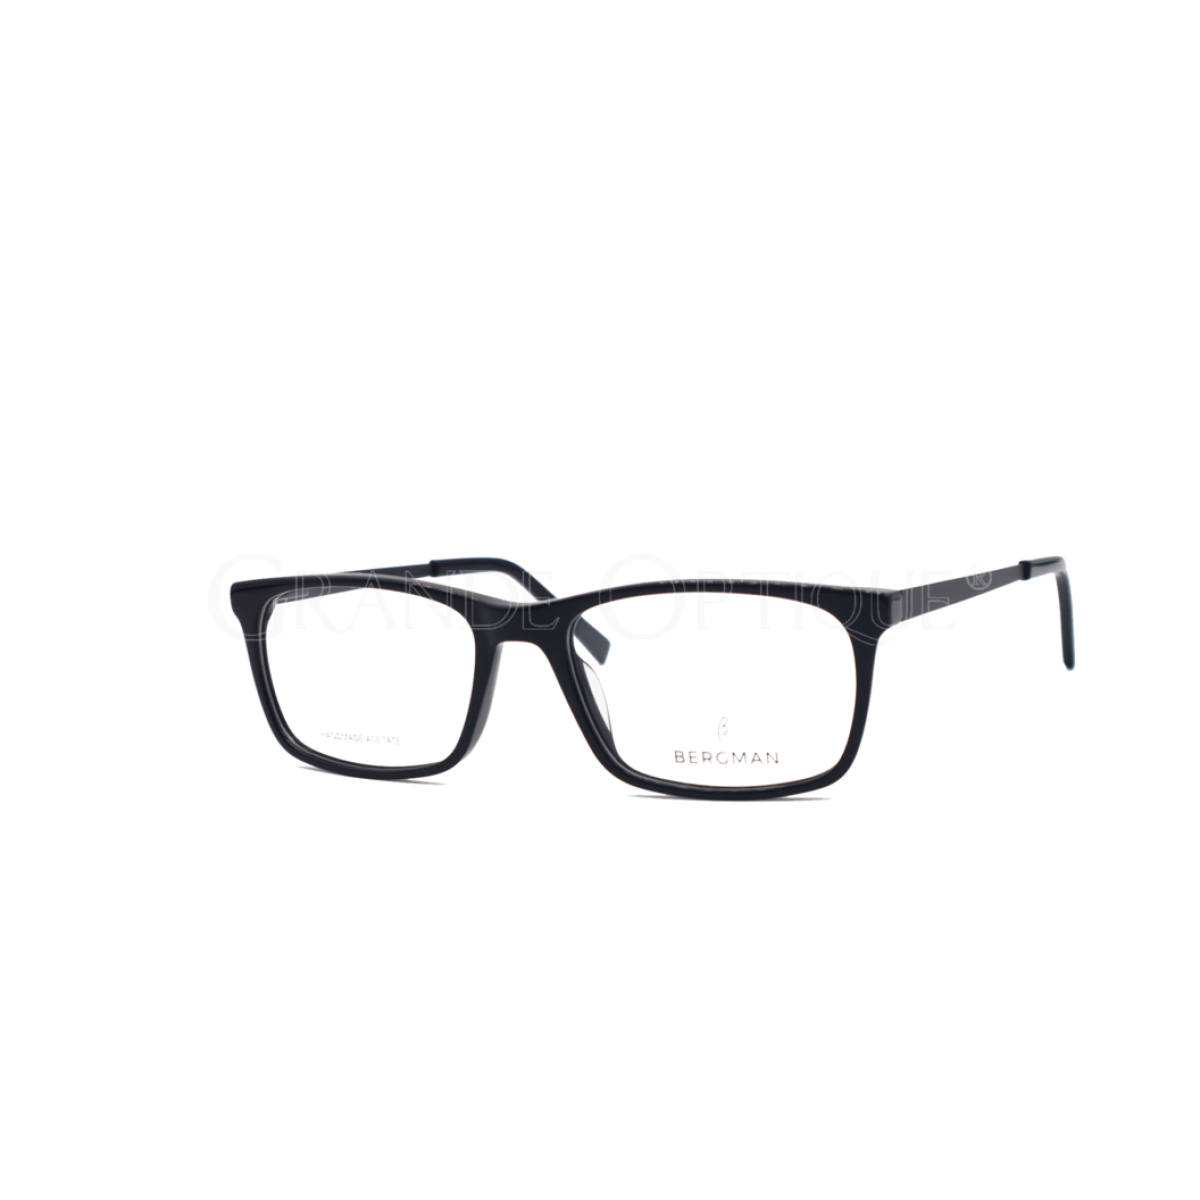 Rame de ochelari Bergman 4620 c3